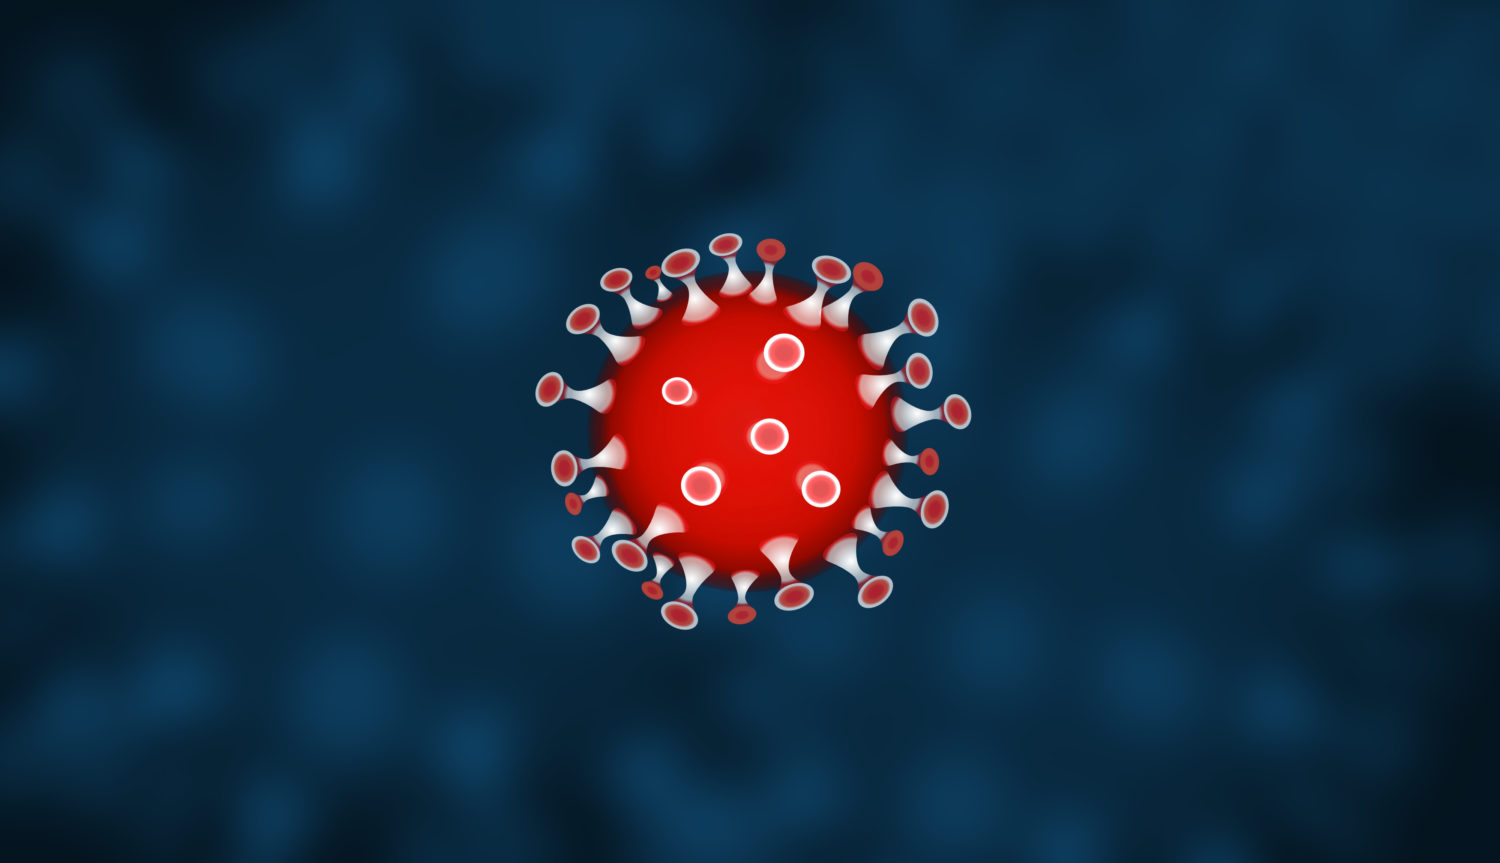 Free image download: Coronavirus, red, blue, #000058